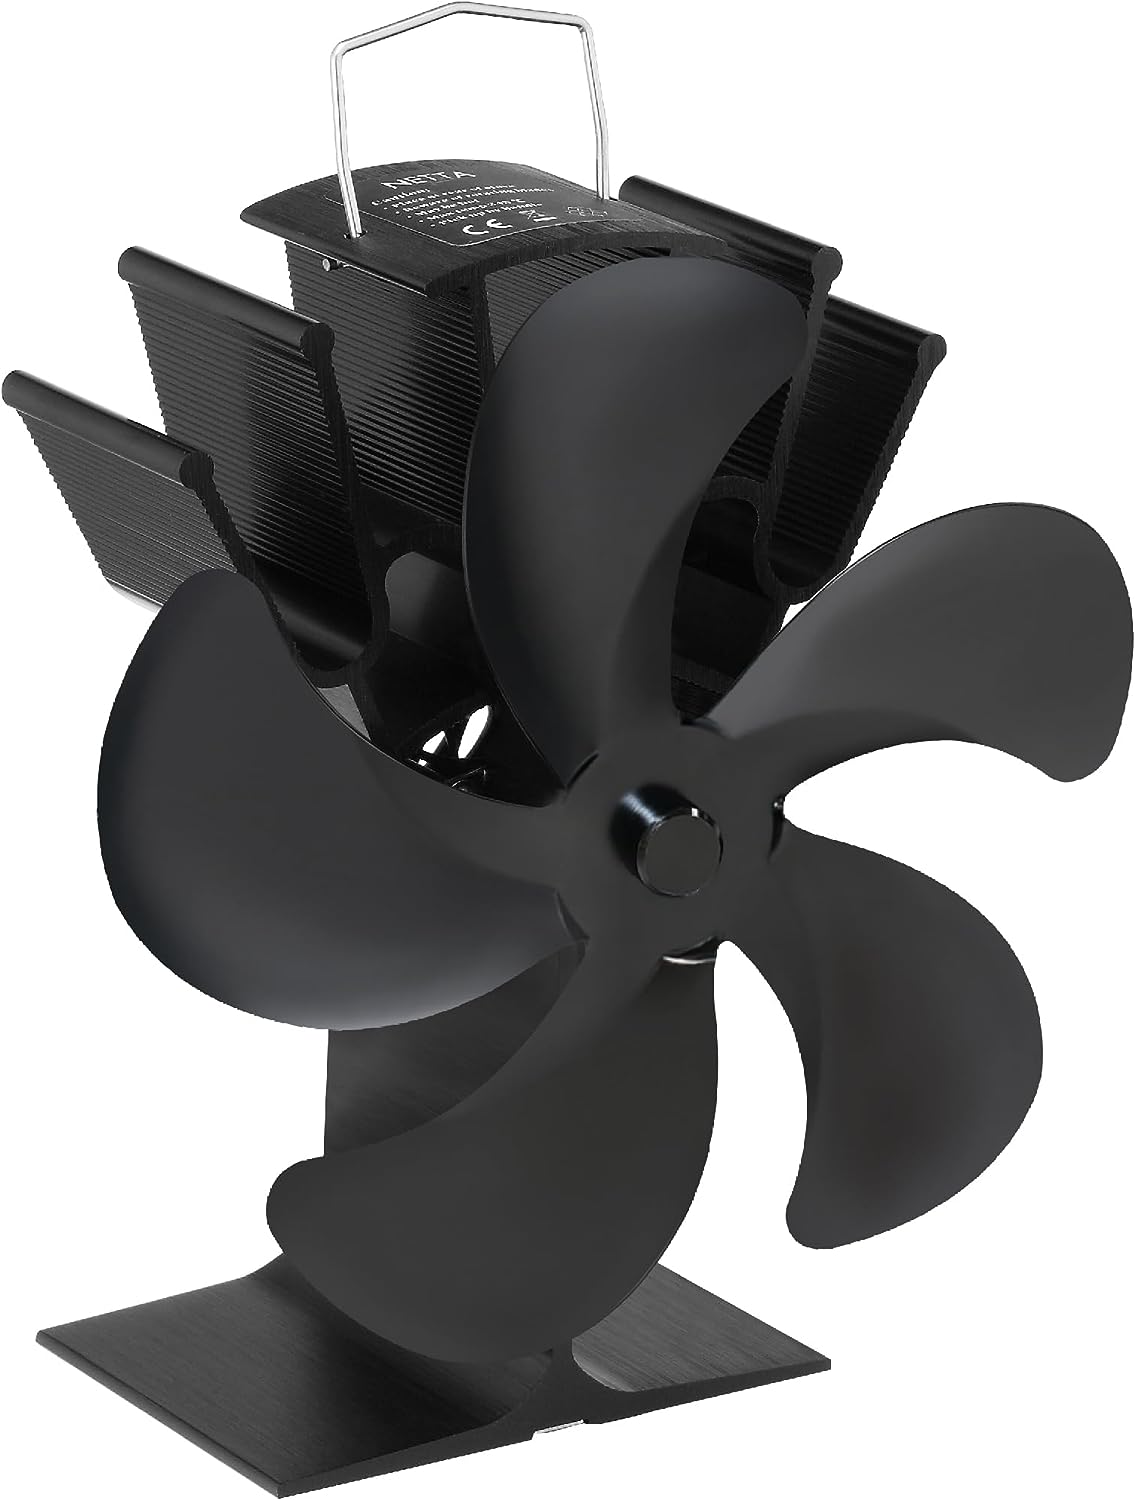 NETTA 5 Blade Heat-Powered Fireplace Stove Fan Silent Operation - Black